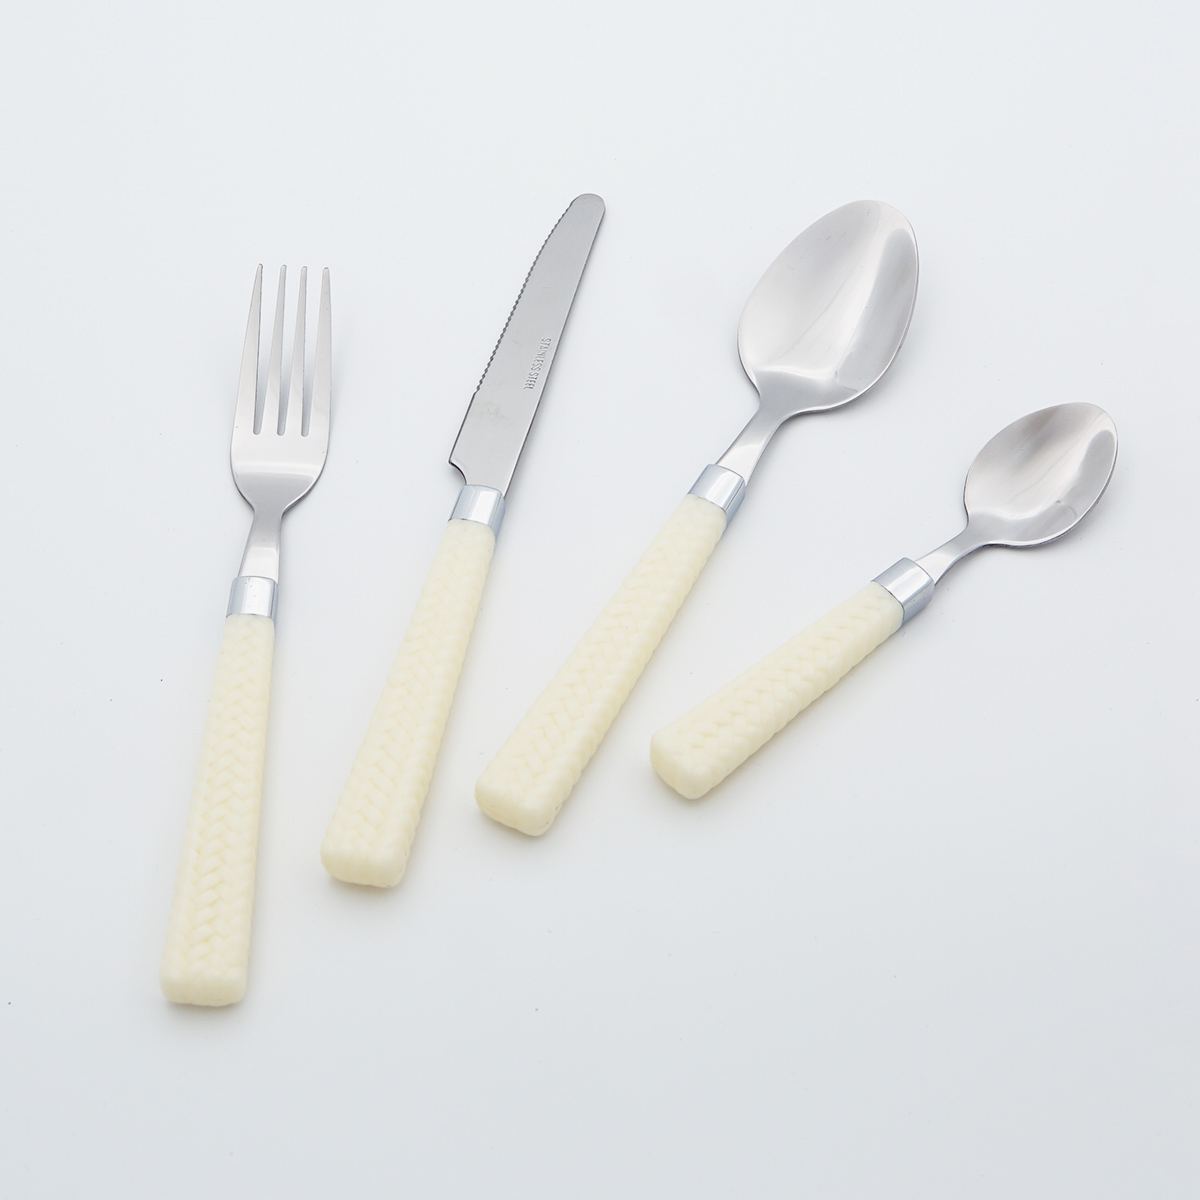 Stainless Steel Cutlery Plastic Handle Food Grade Flatware Wholesale Mirror Polish Silverware Set for Restaurant Hotel